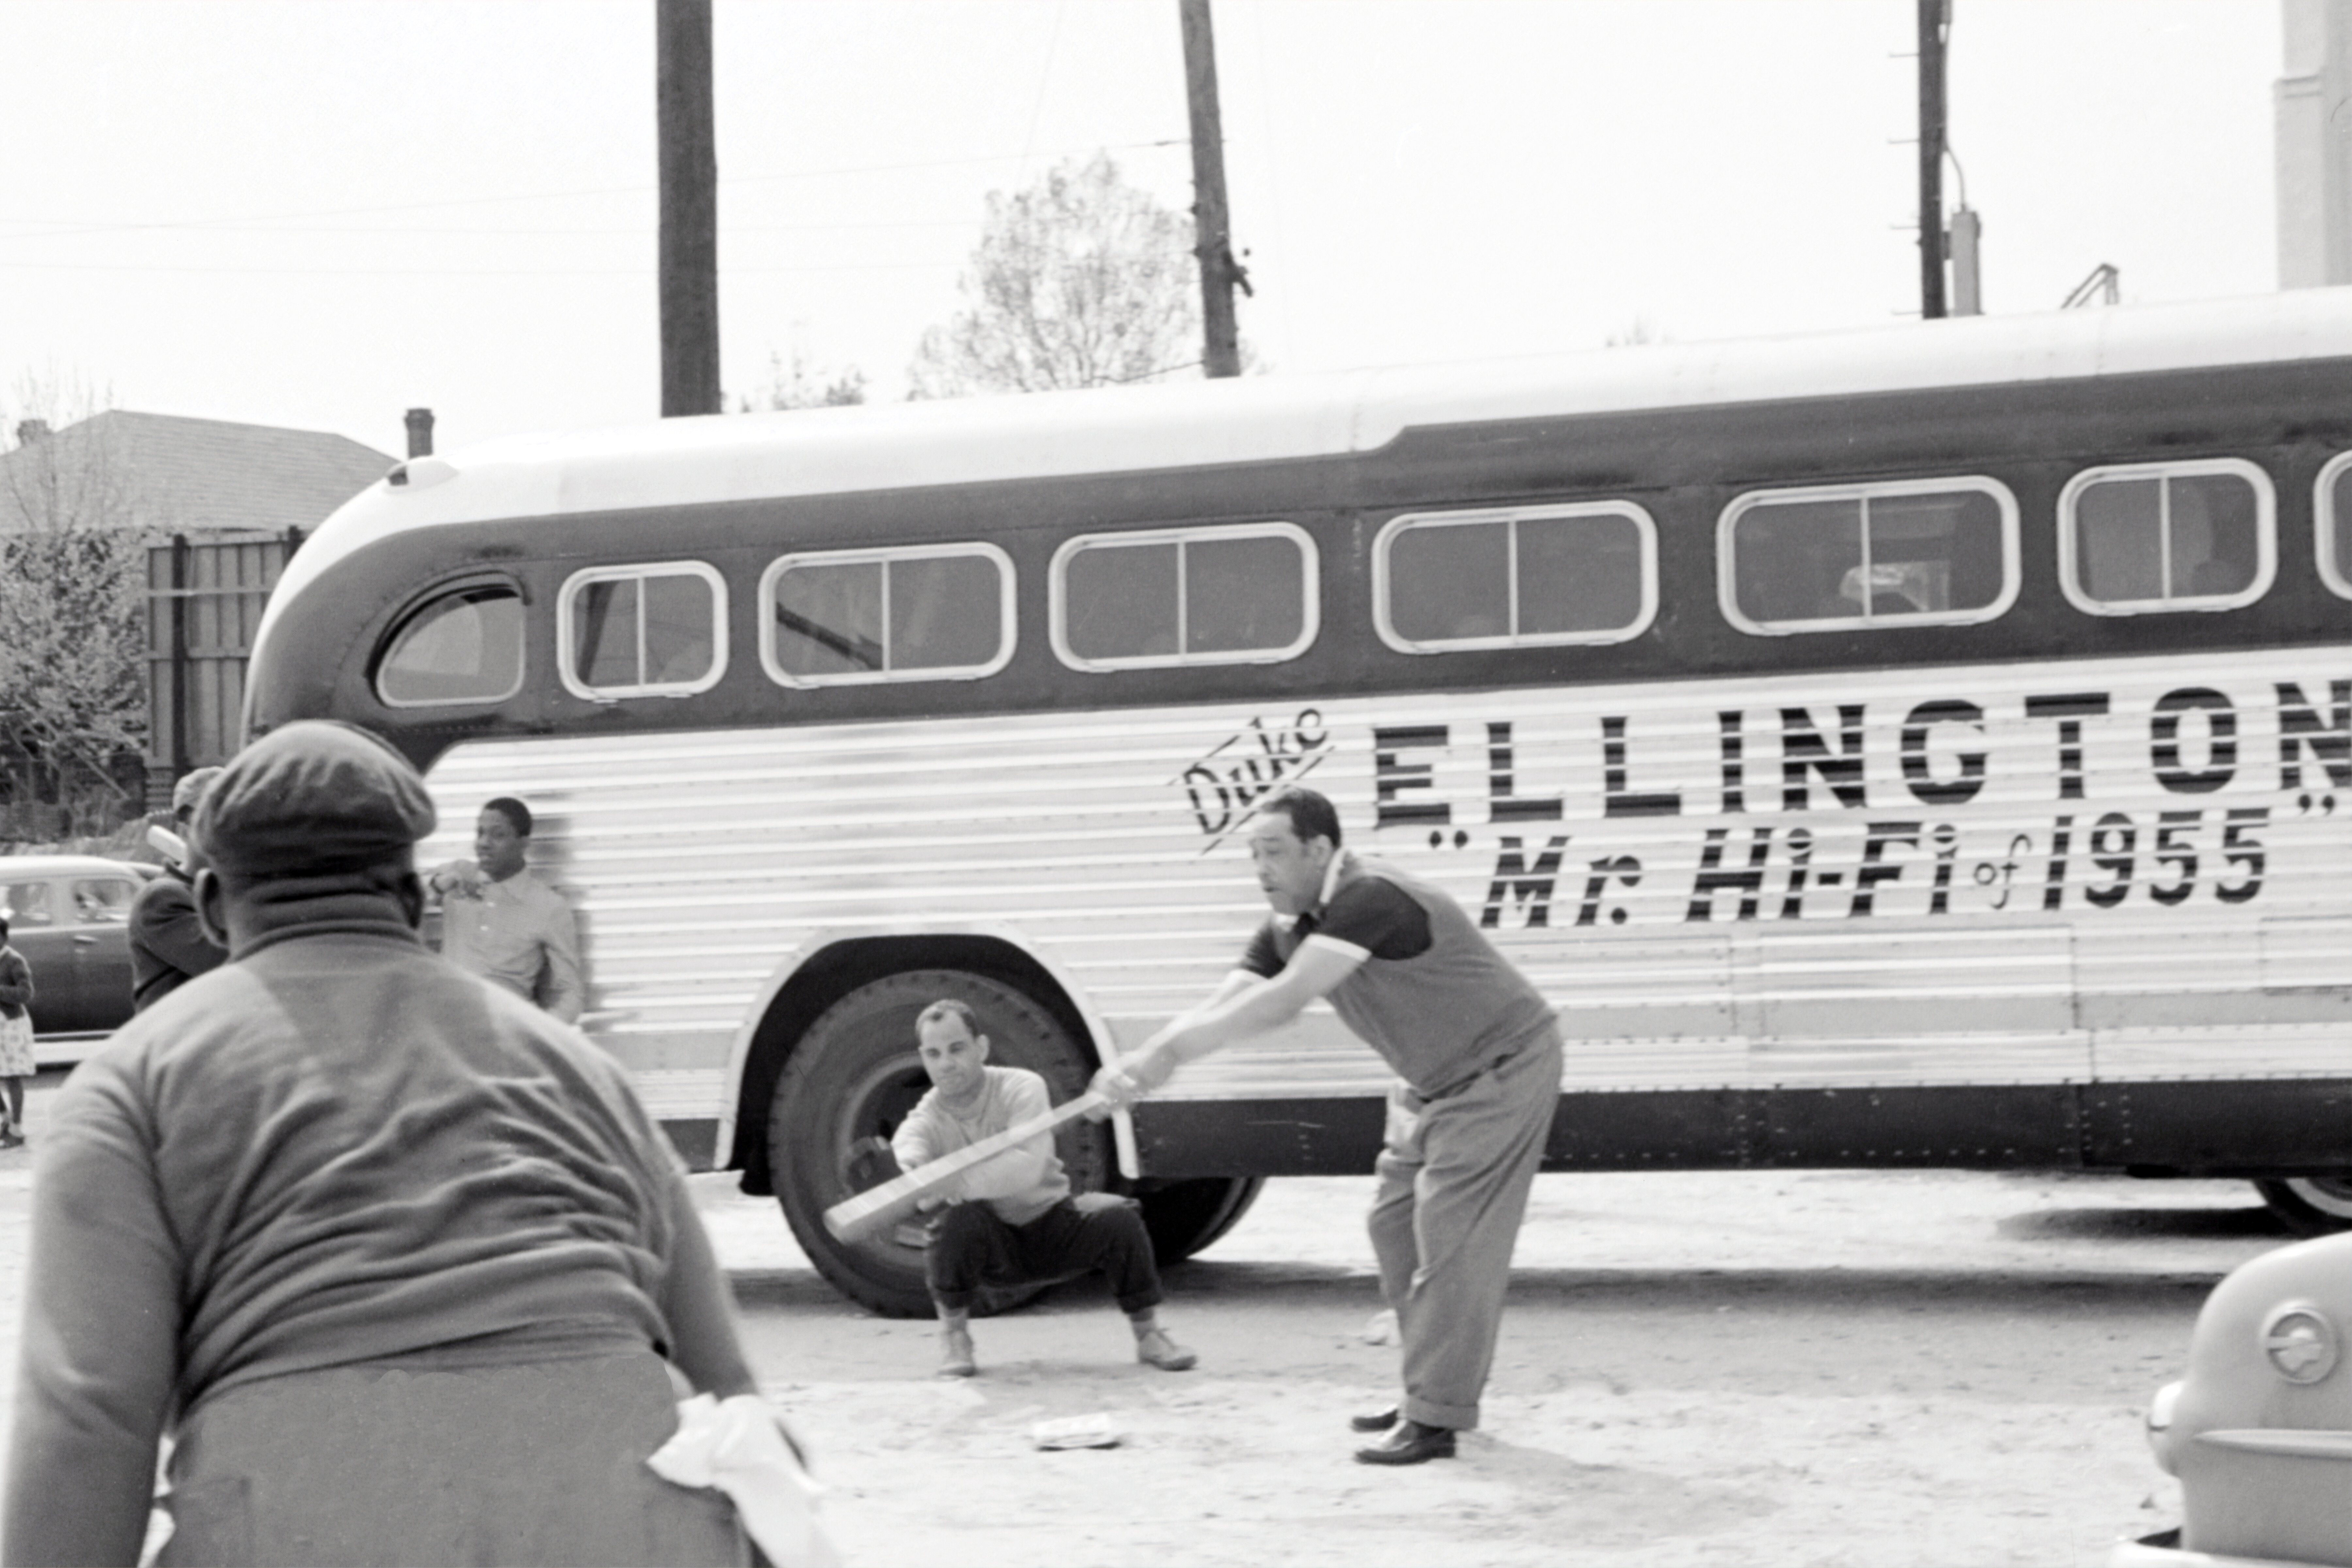 Duke Ellington playing baseball by tourbus, Florida 1955